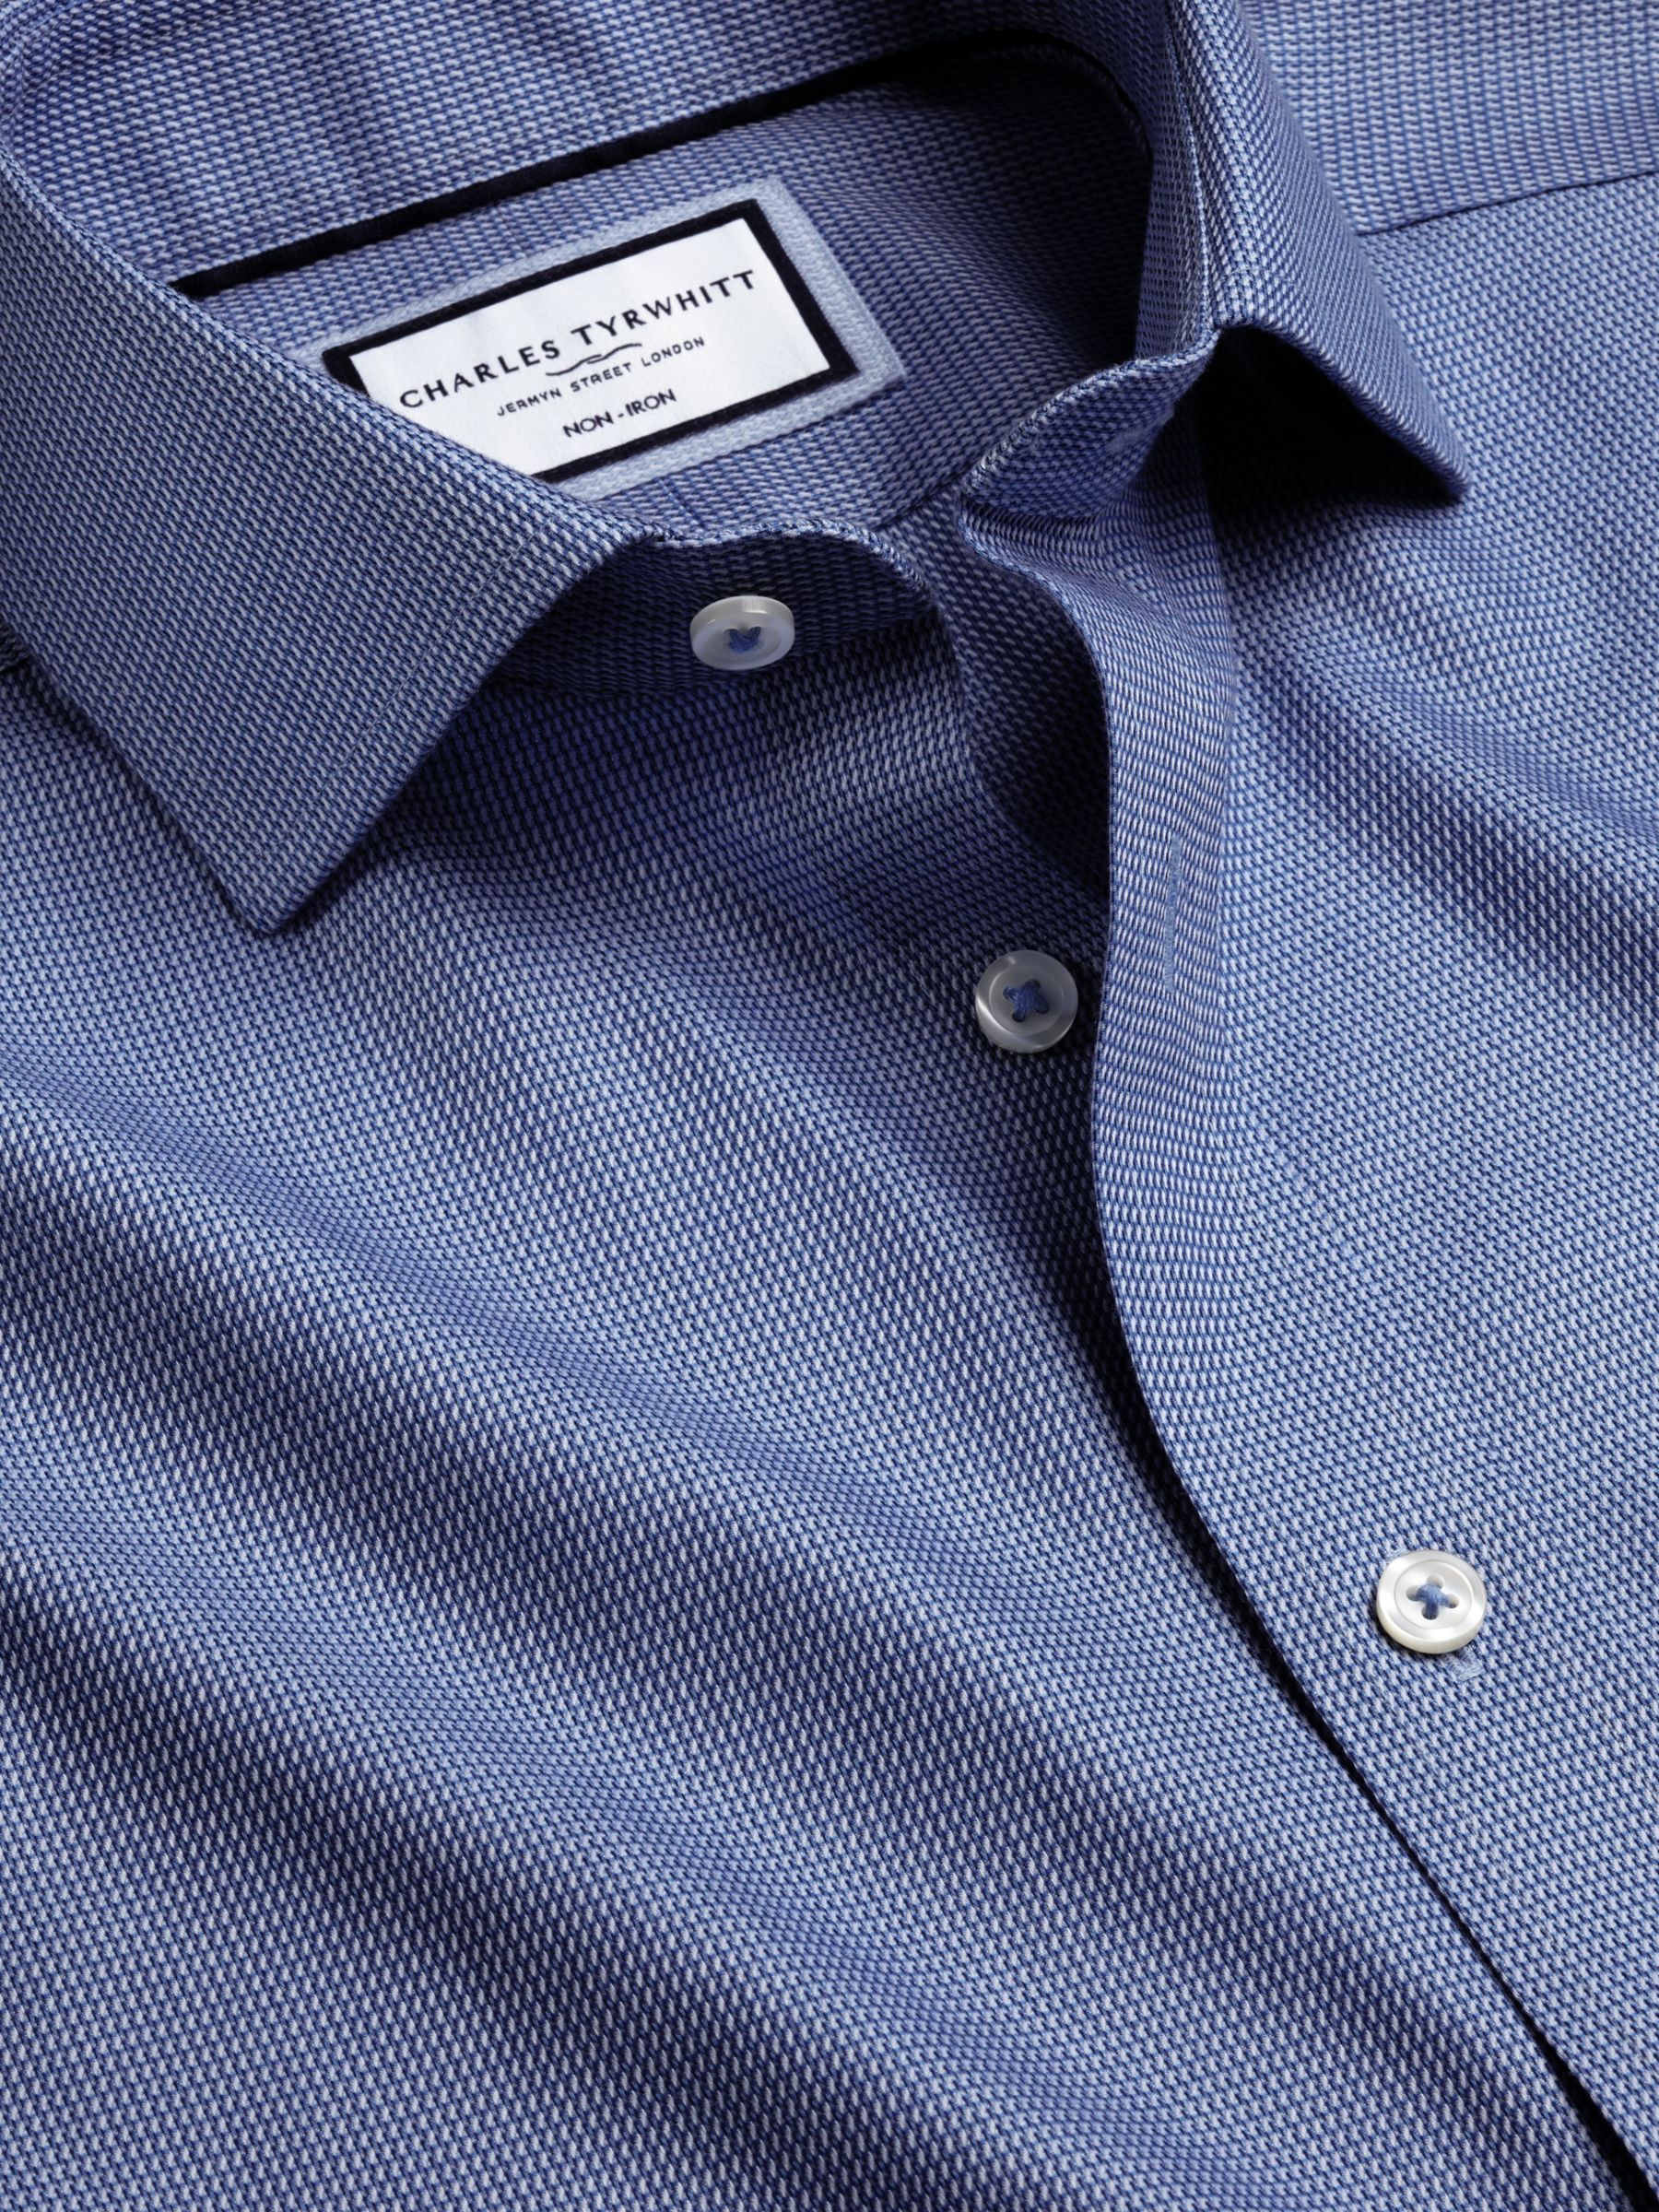 Charles Tyrwhitt Non-Iron Mayfair Textured Dobby Weave Shirt, Cobalt Blue, 14.5